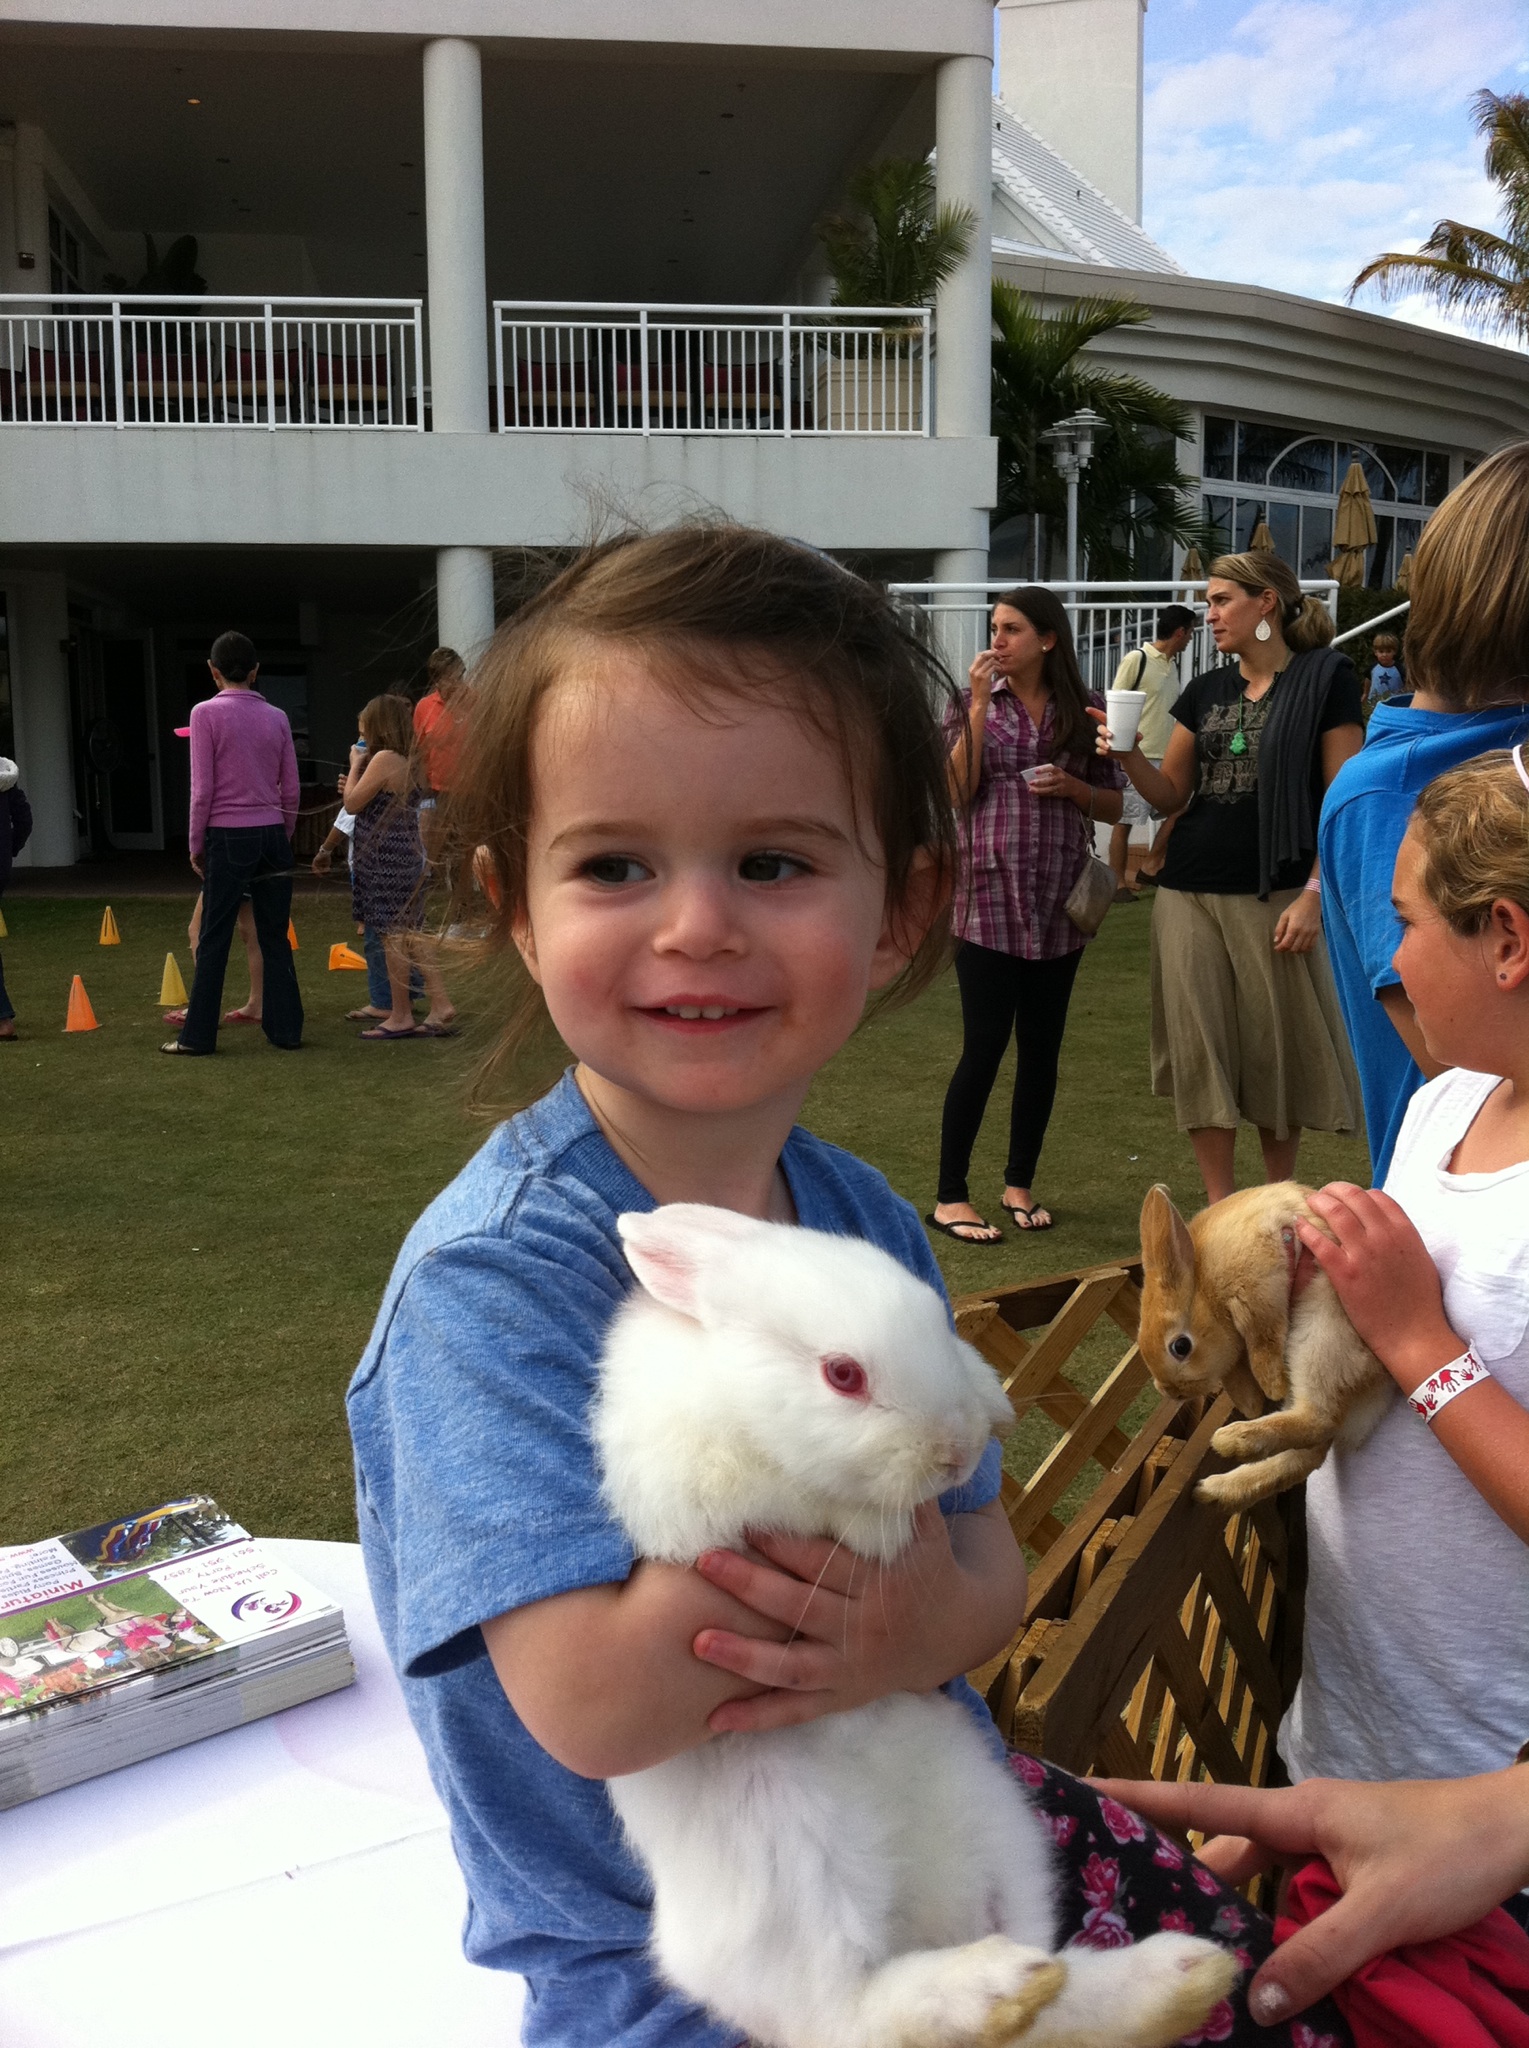 Avi loved that baby bunny!